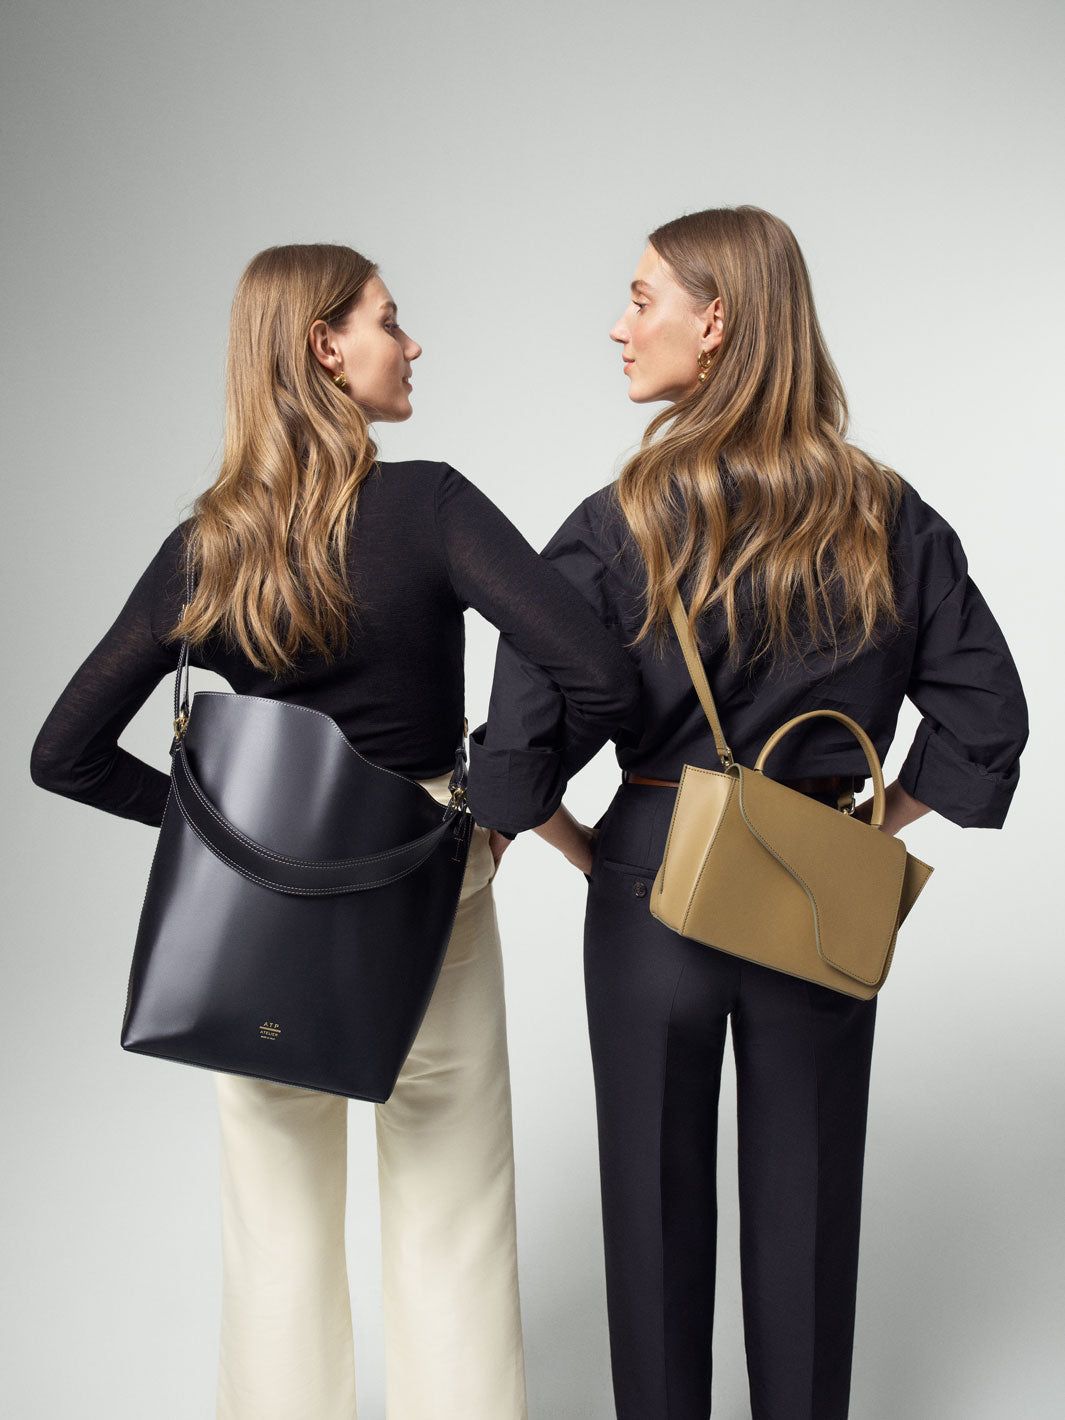 Buy Off White Handbags for Women Online | Myntra